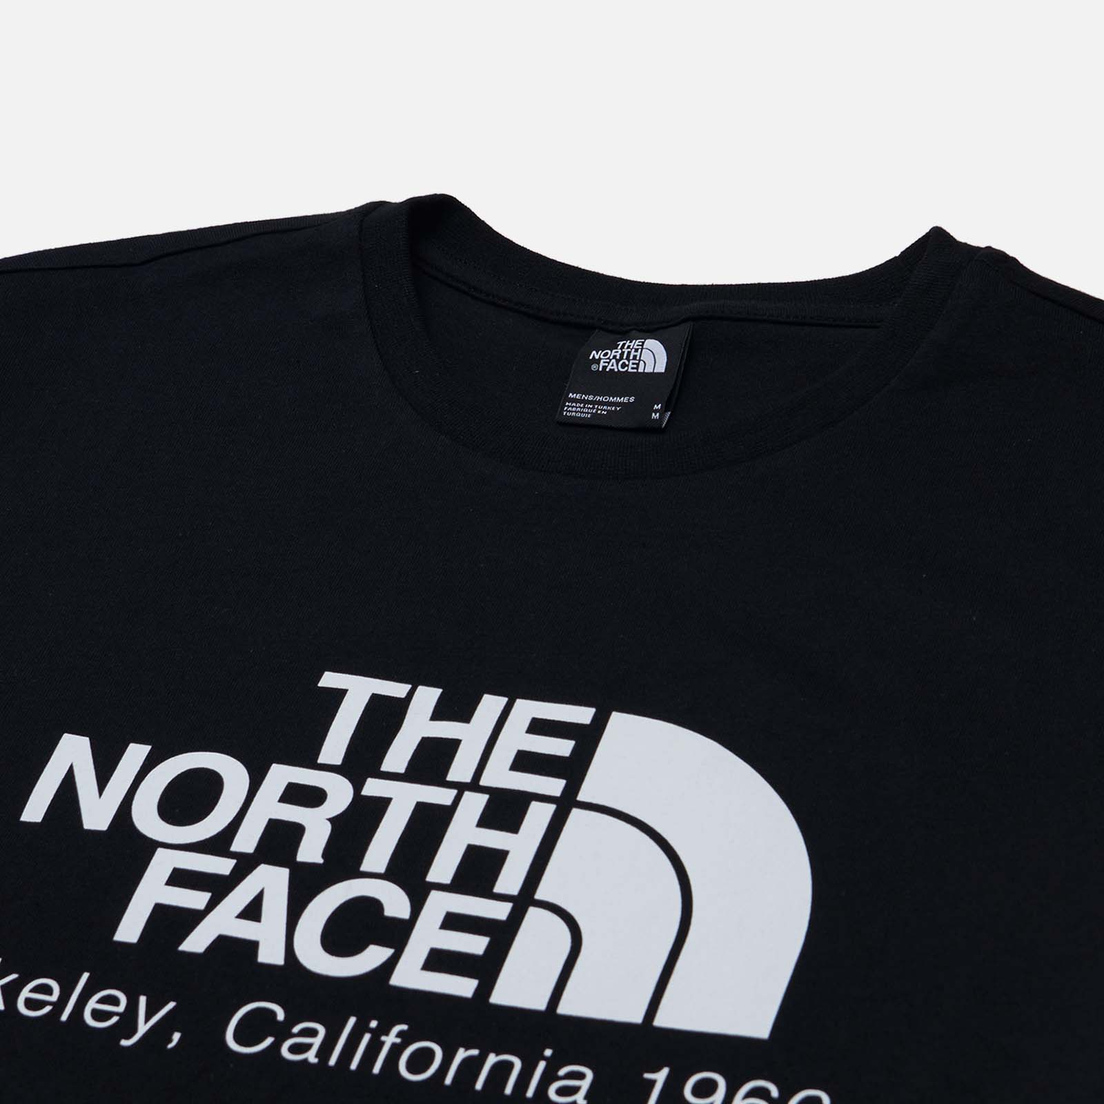 The North Face Мужская футболка Berkeley California